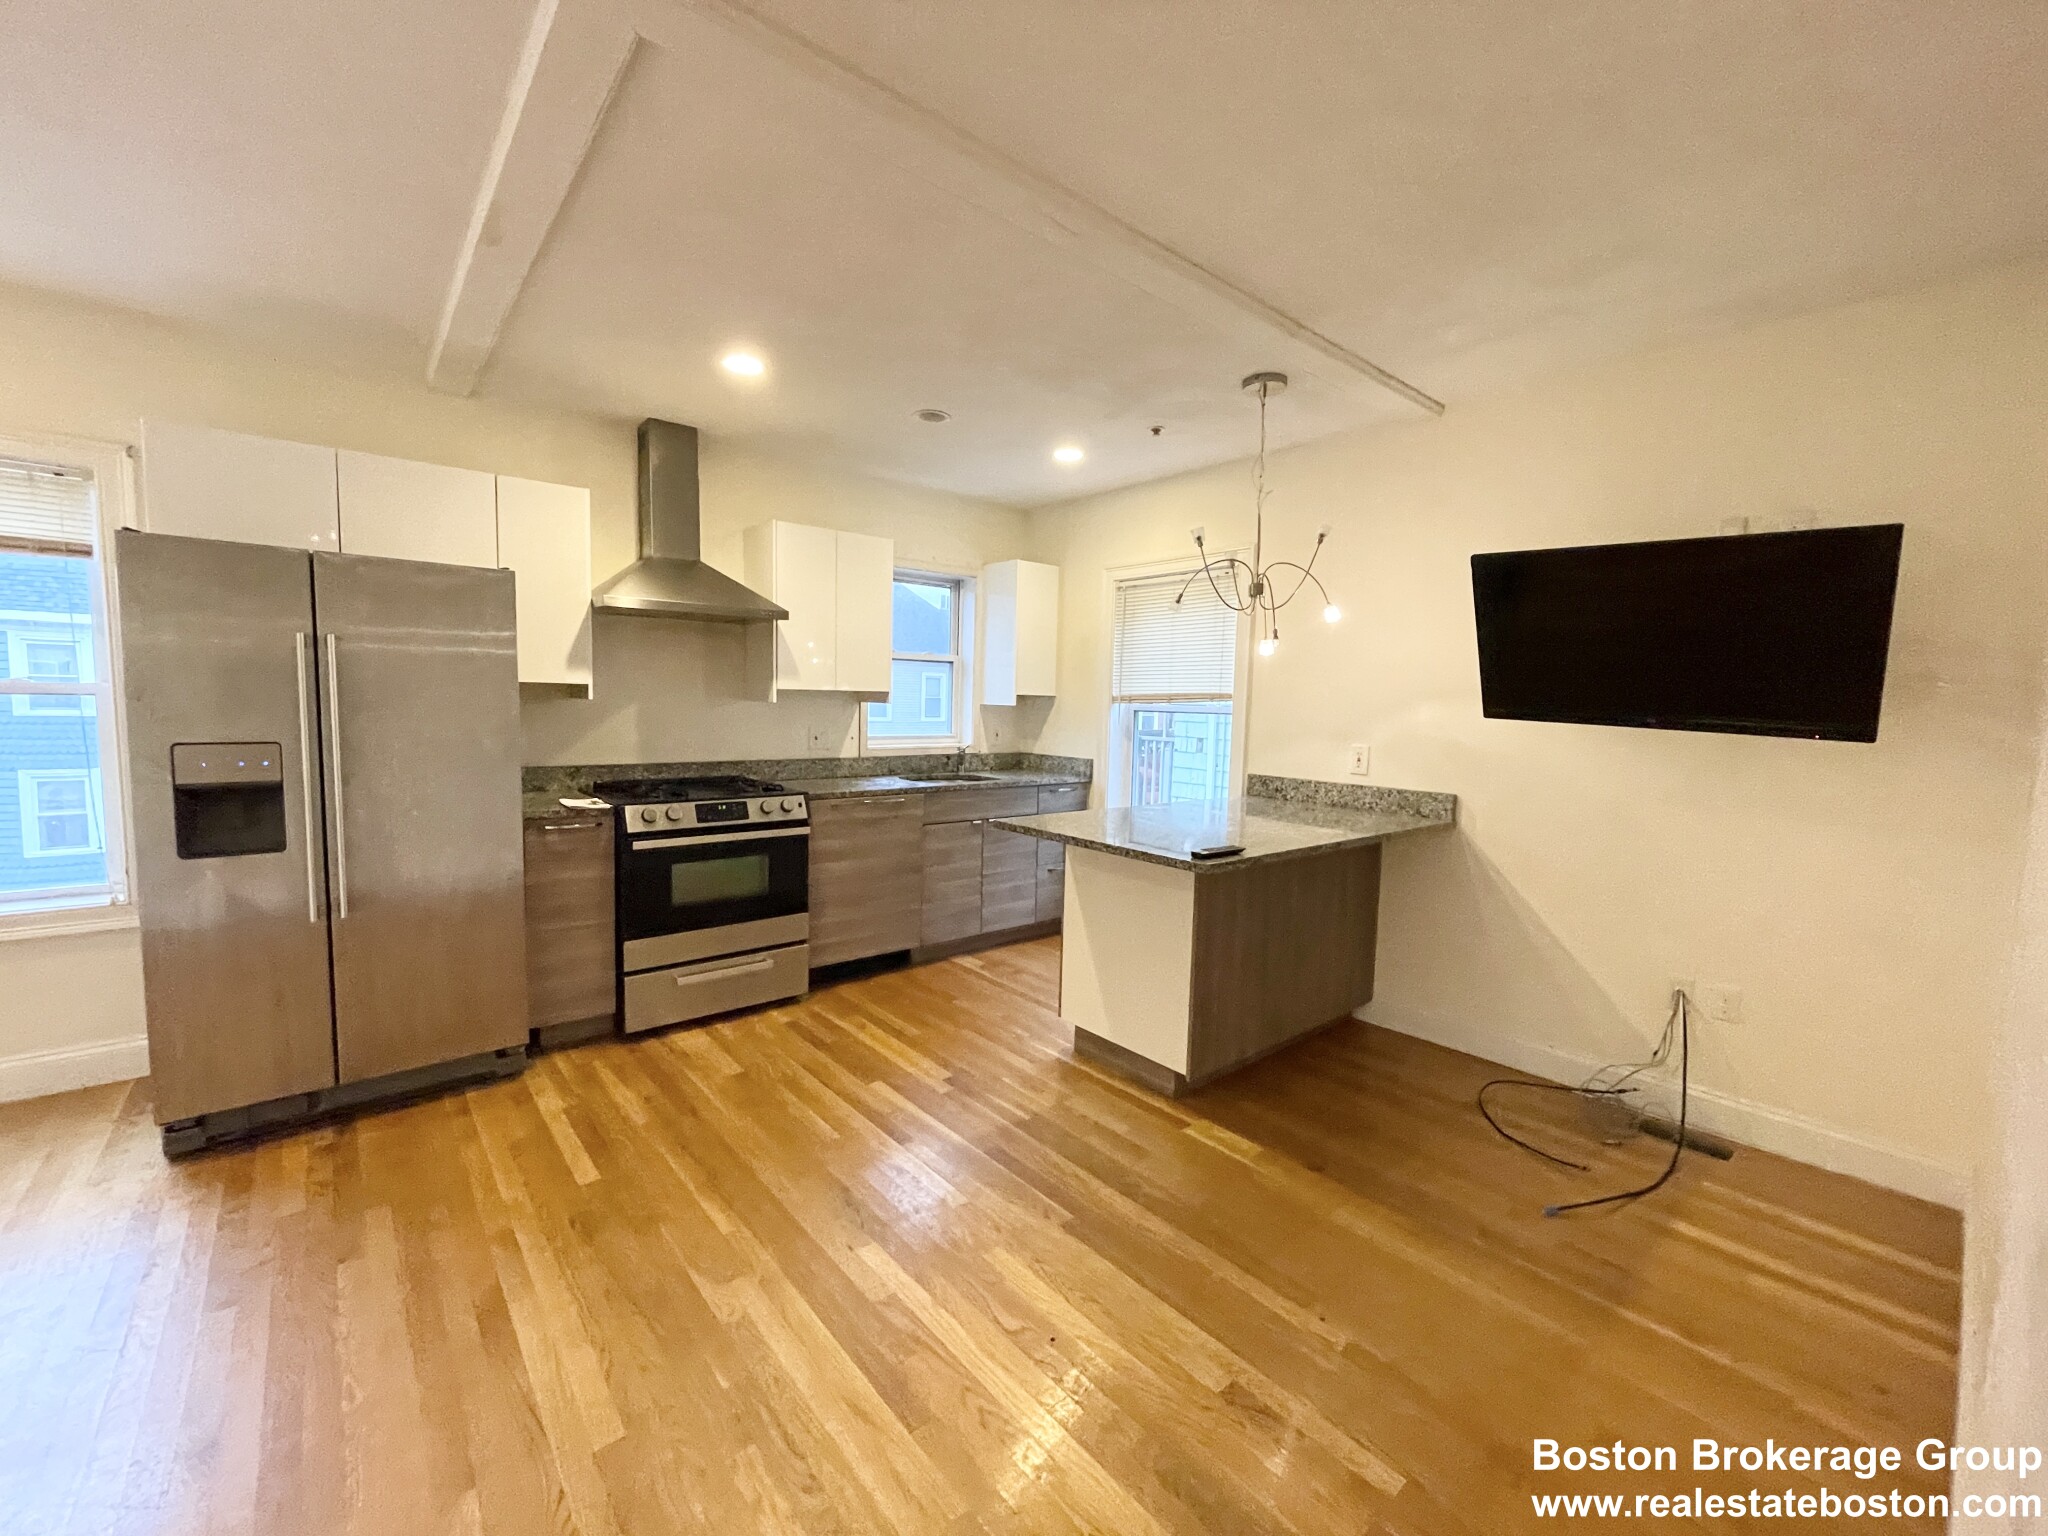 Photos of apartment on Calumet,Boston MA 02120